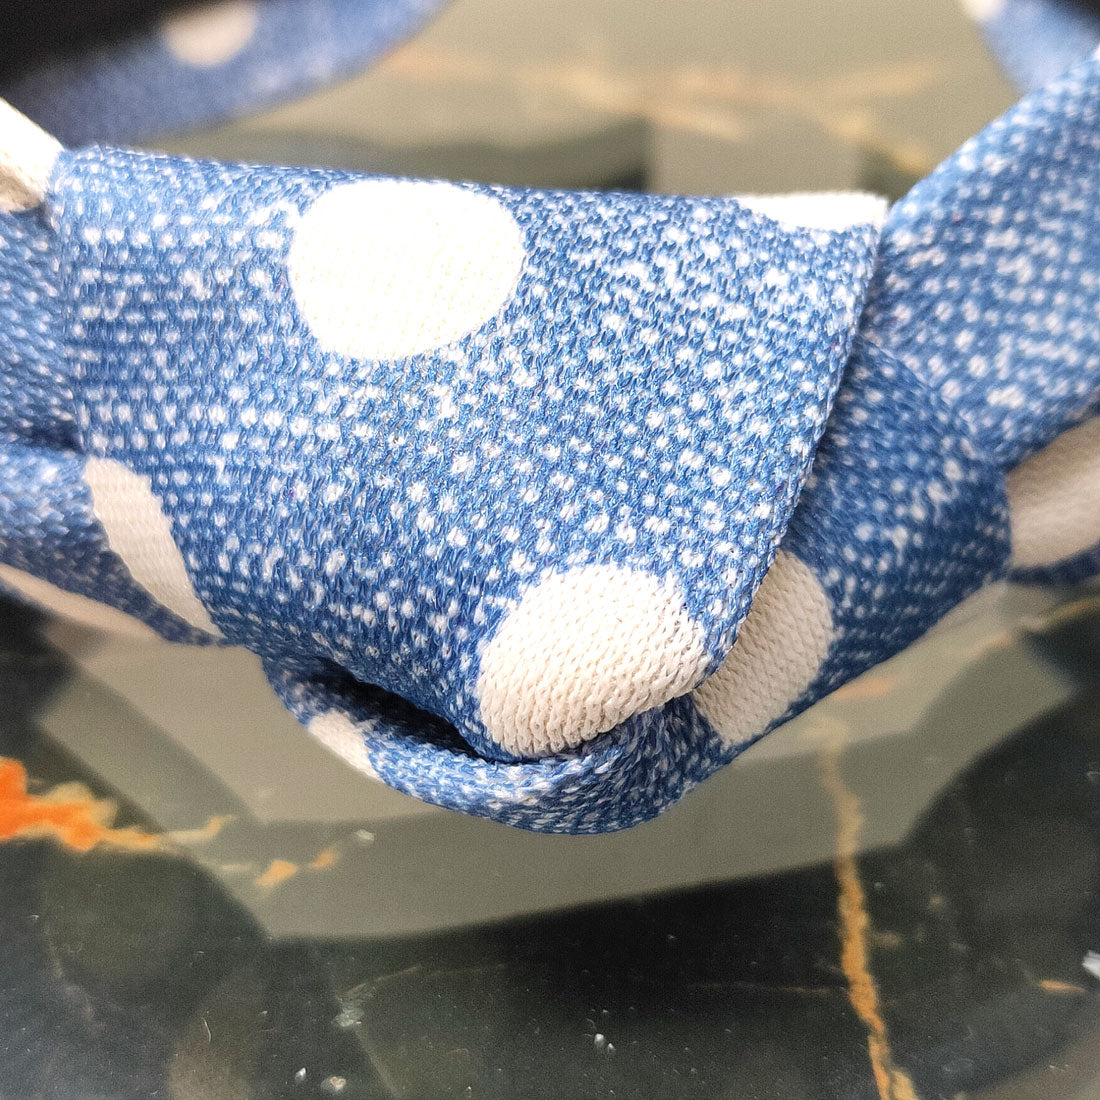 Anokhi Ada Handmade Blue Polka Dots Design Fabric Knot Hairband/Headband for Girls and Women -14-20H